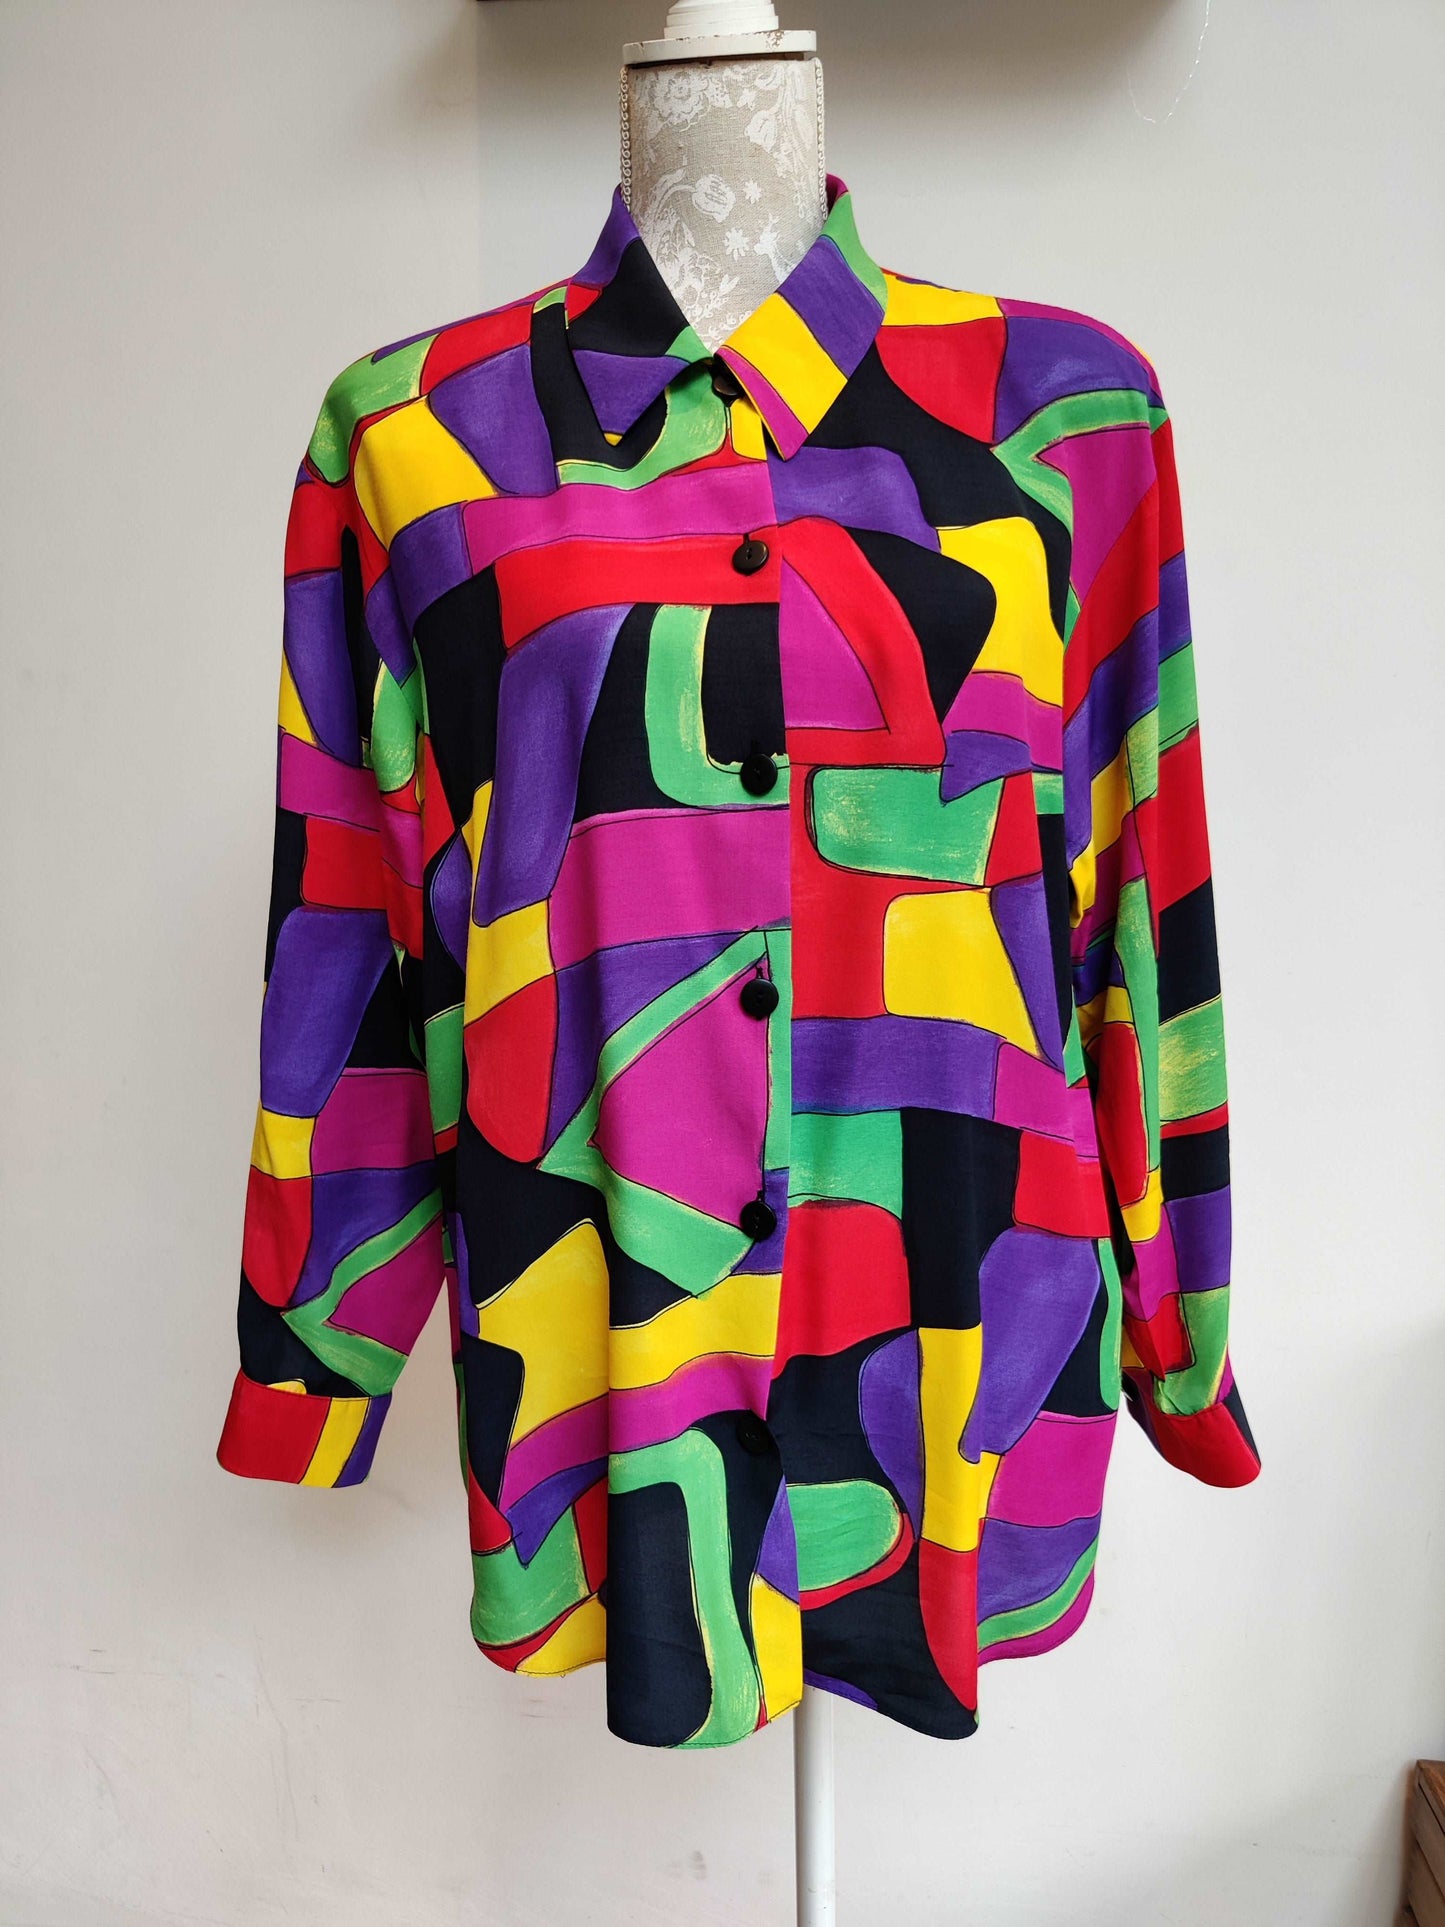 1980s colourful shirt in retro print.